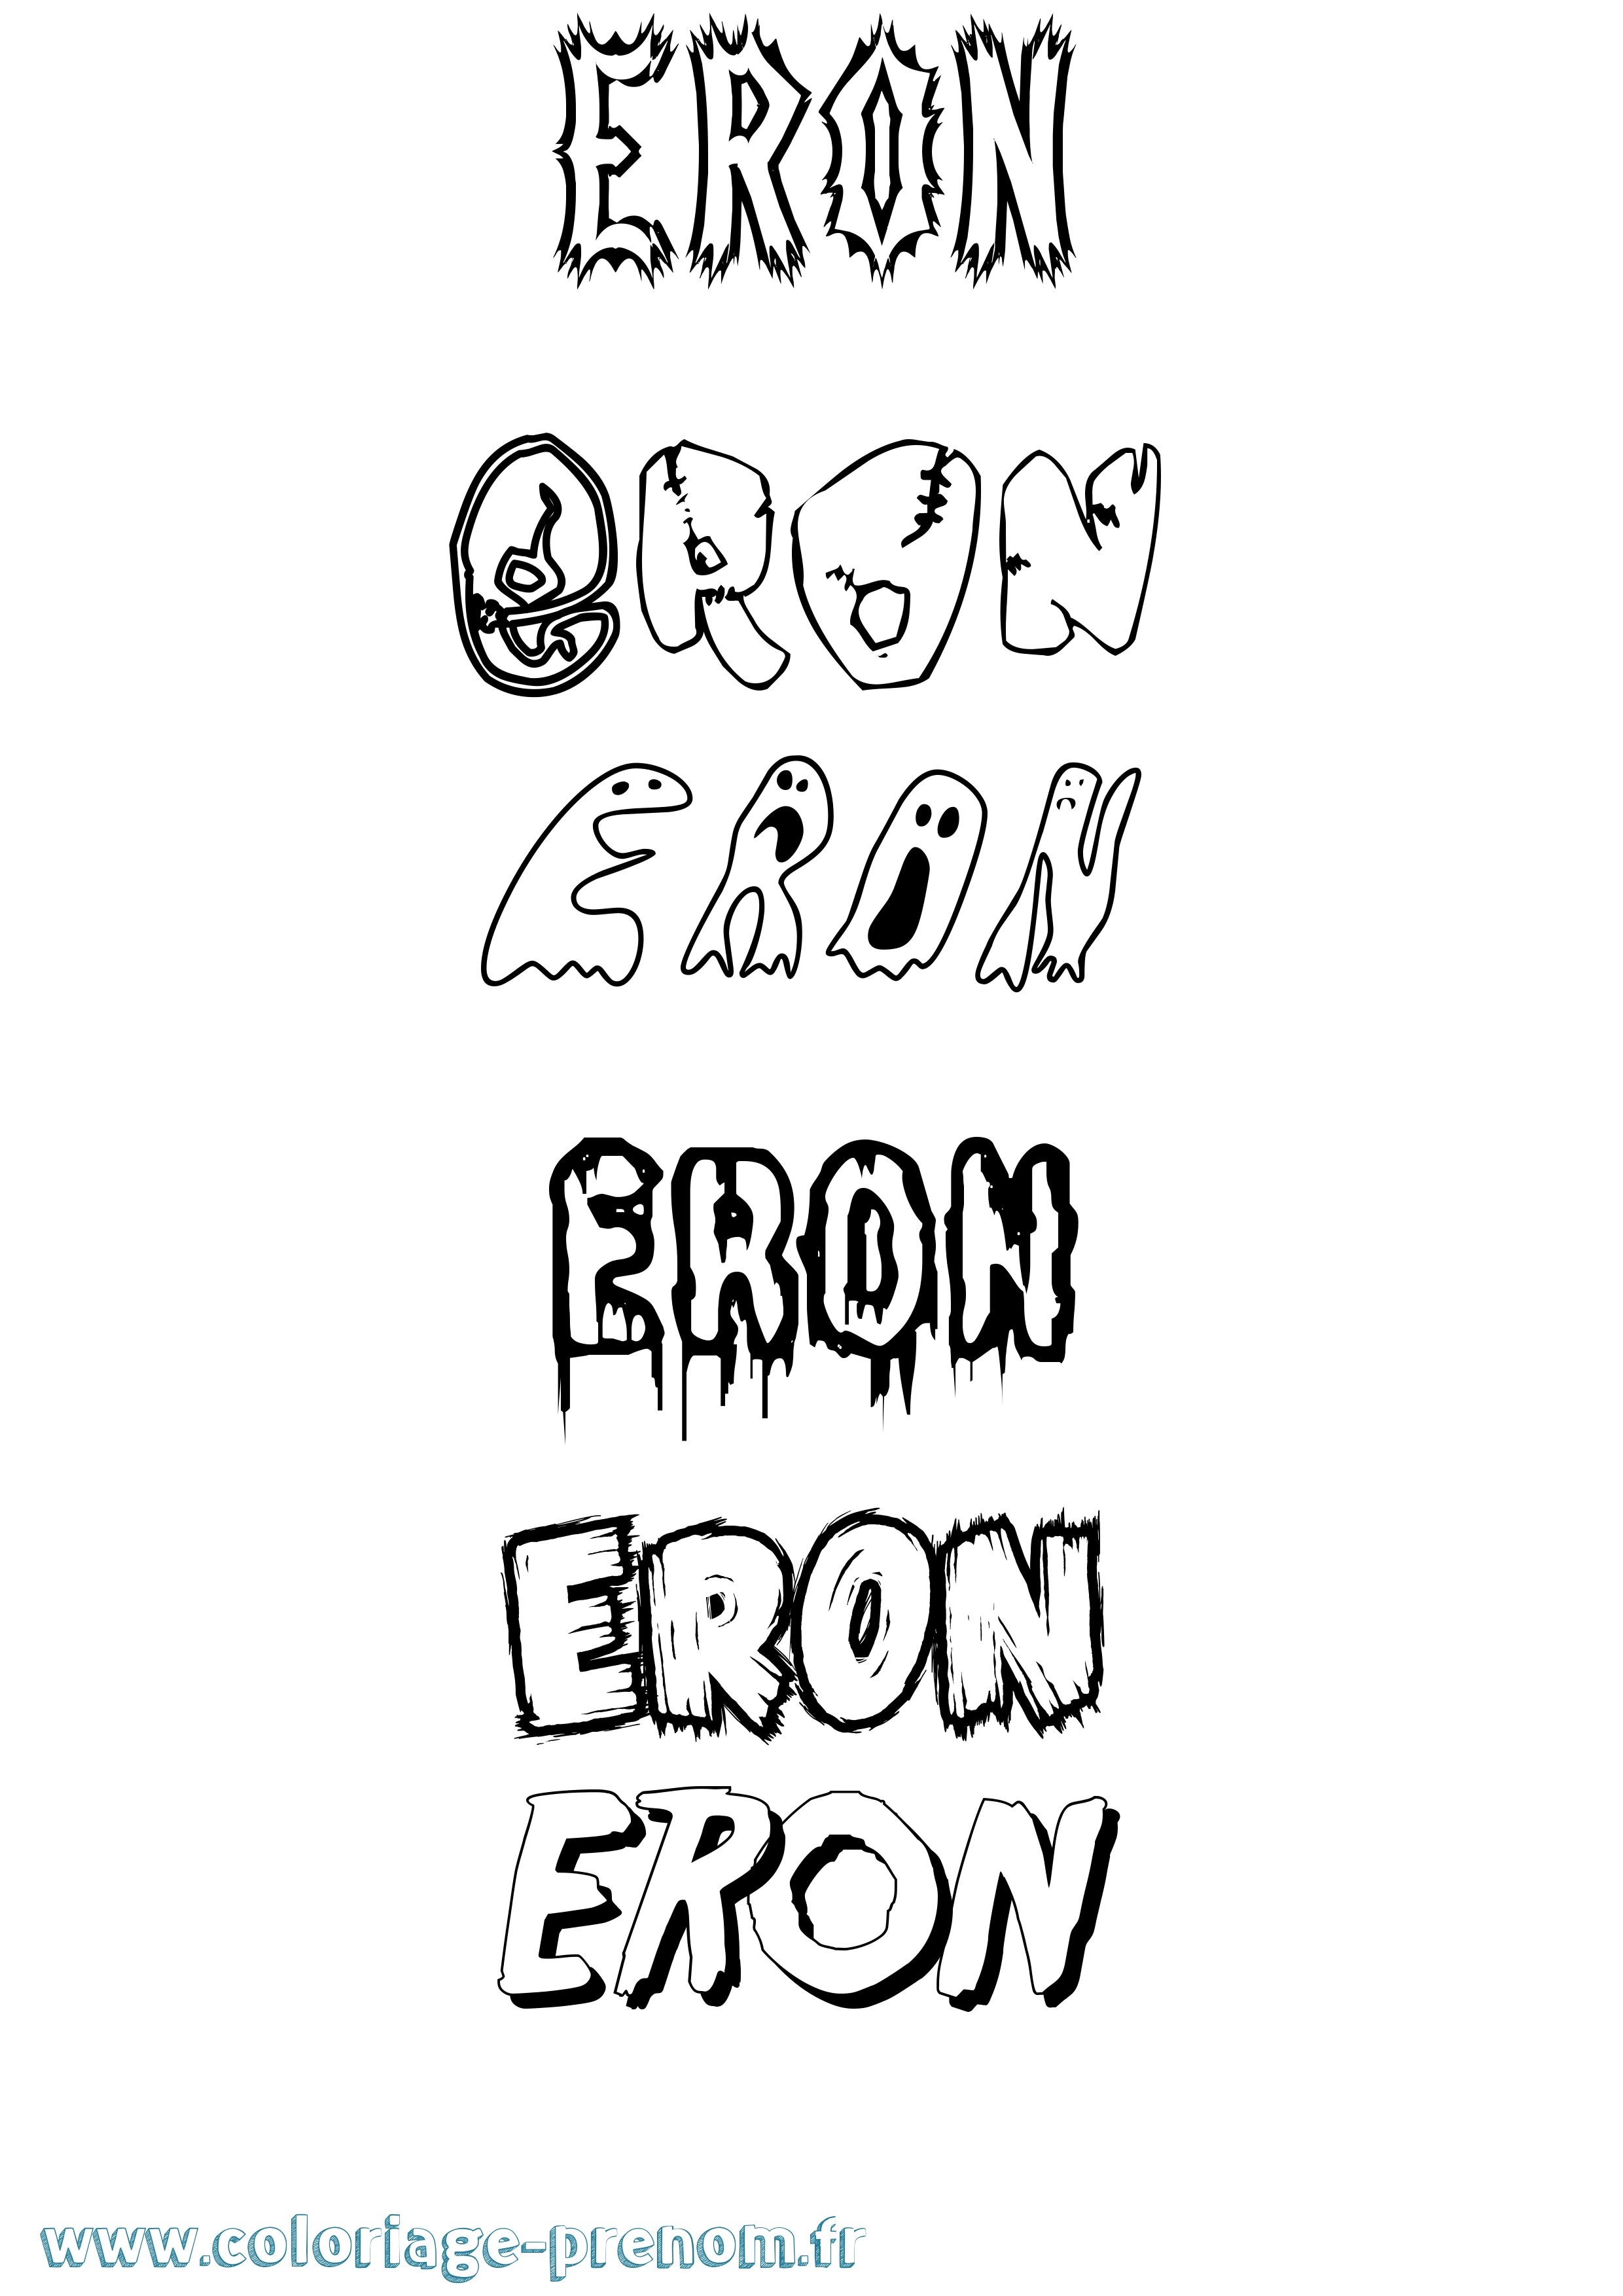 Coloriage prénom Eron Frisson